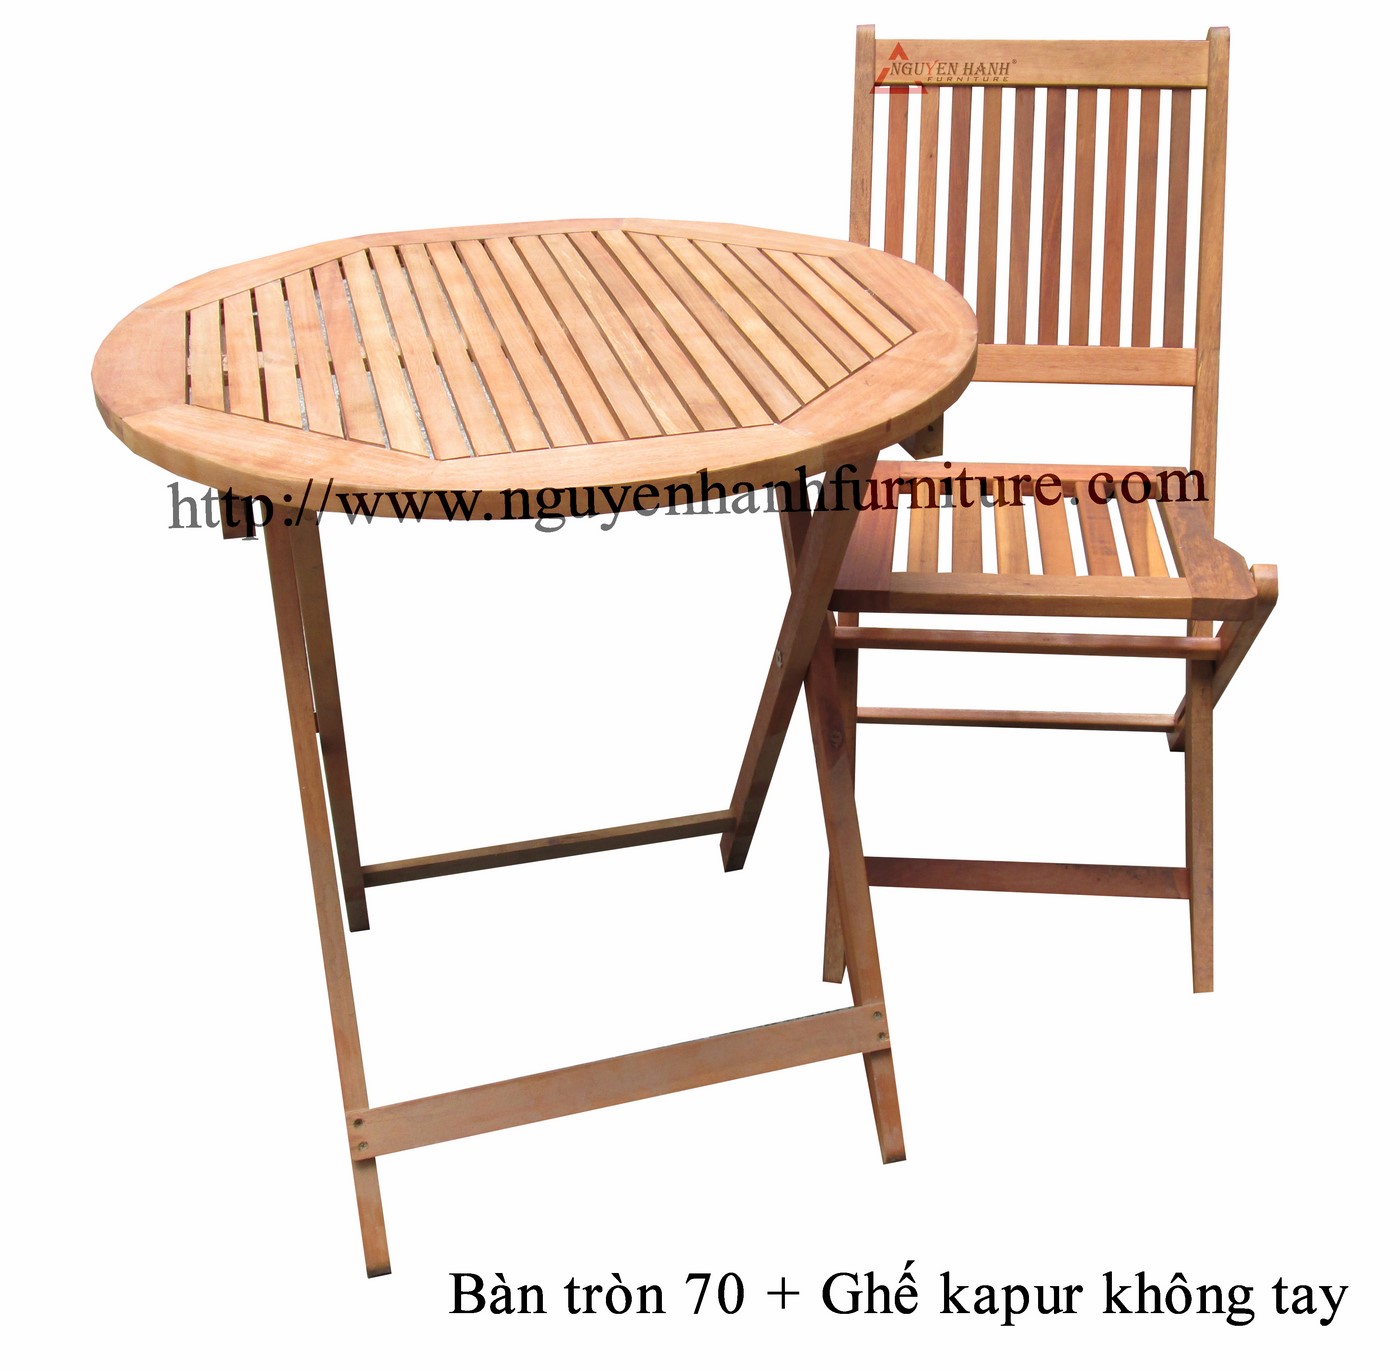 Name product: Folding Round table 70 + Folding Kapur chair - Description: Eucalyptus wood